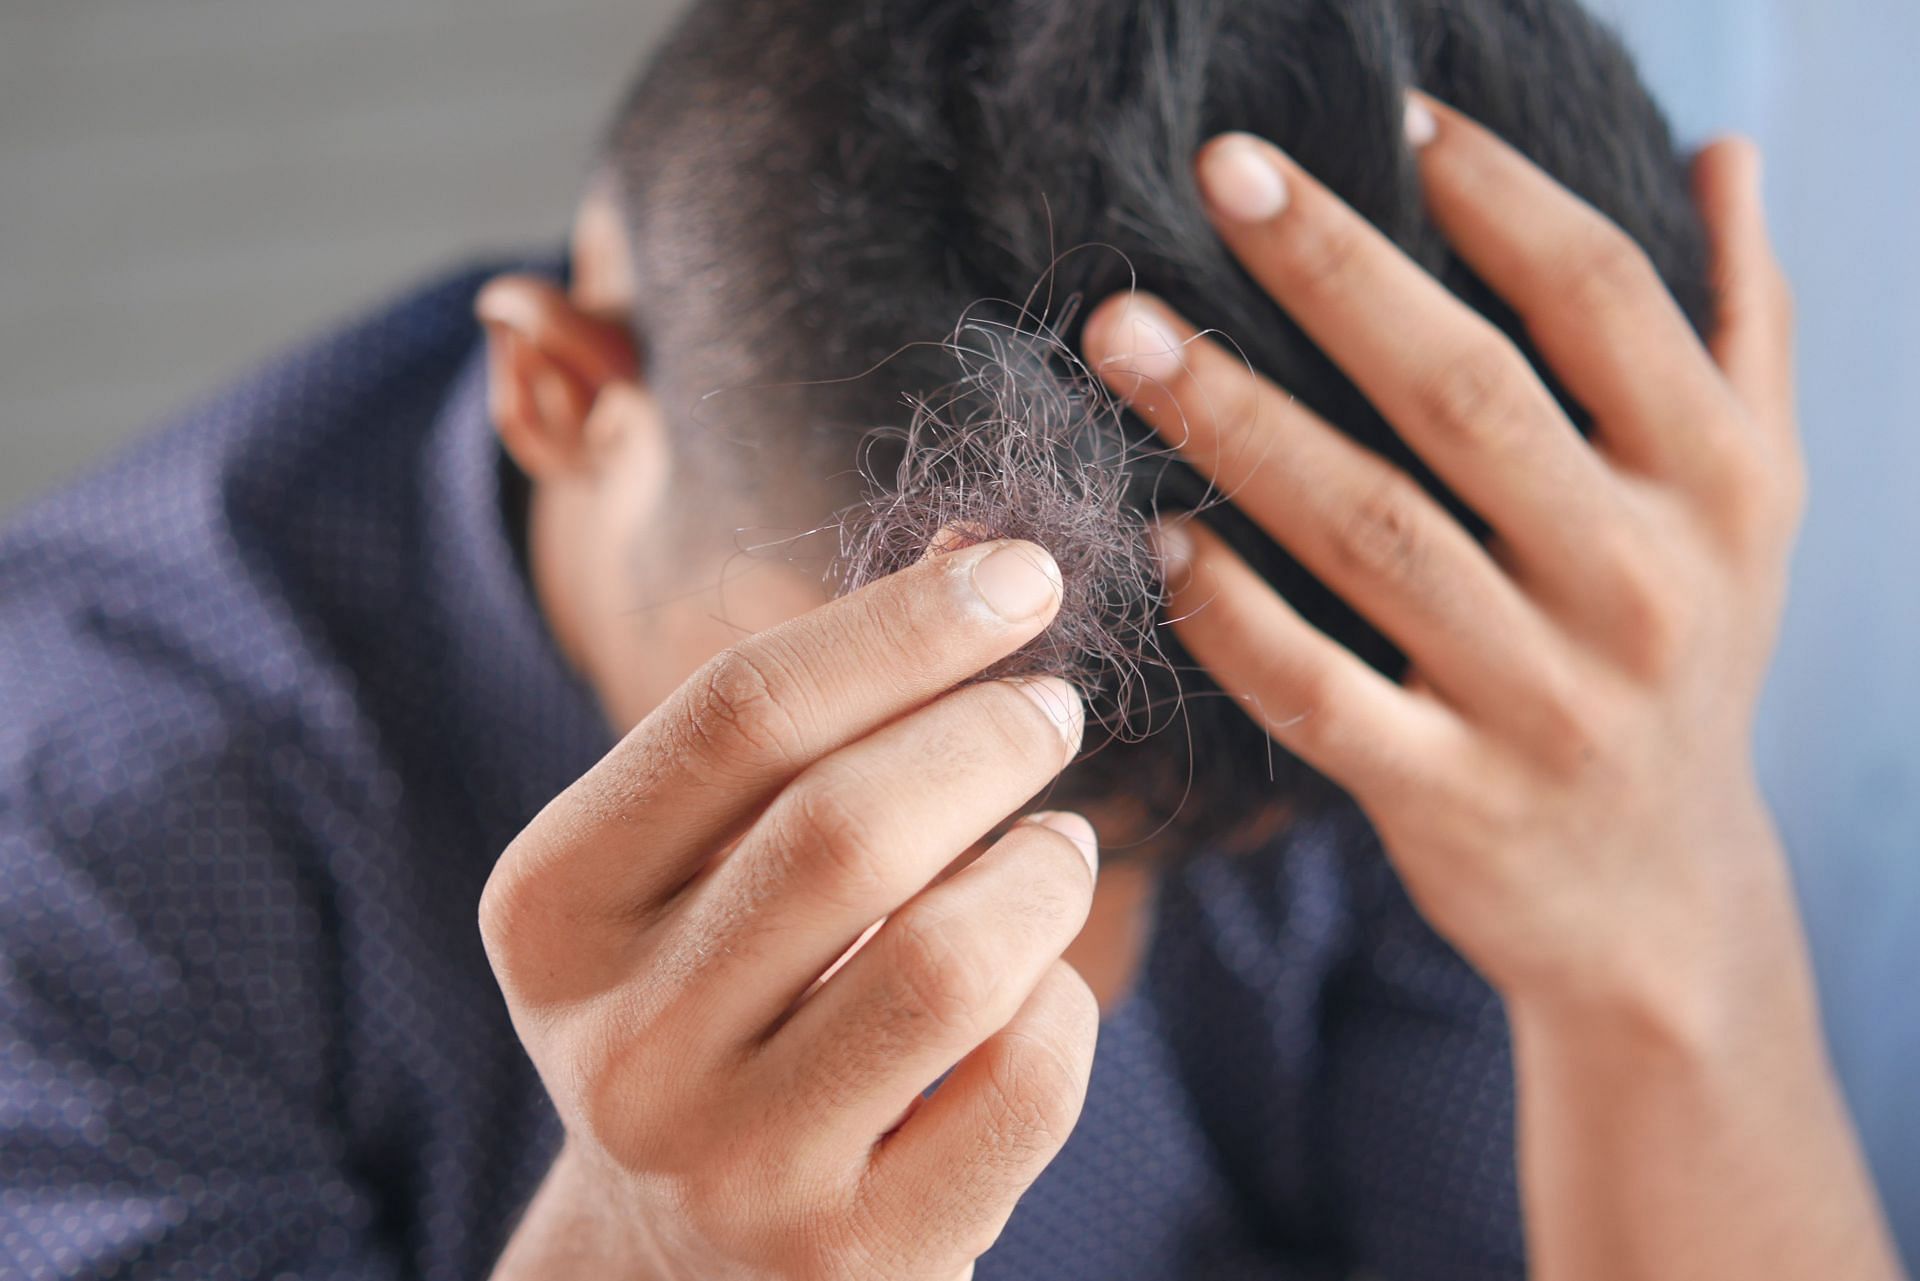 How can dandruff cause hair loss? (Image via Unsplash)